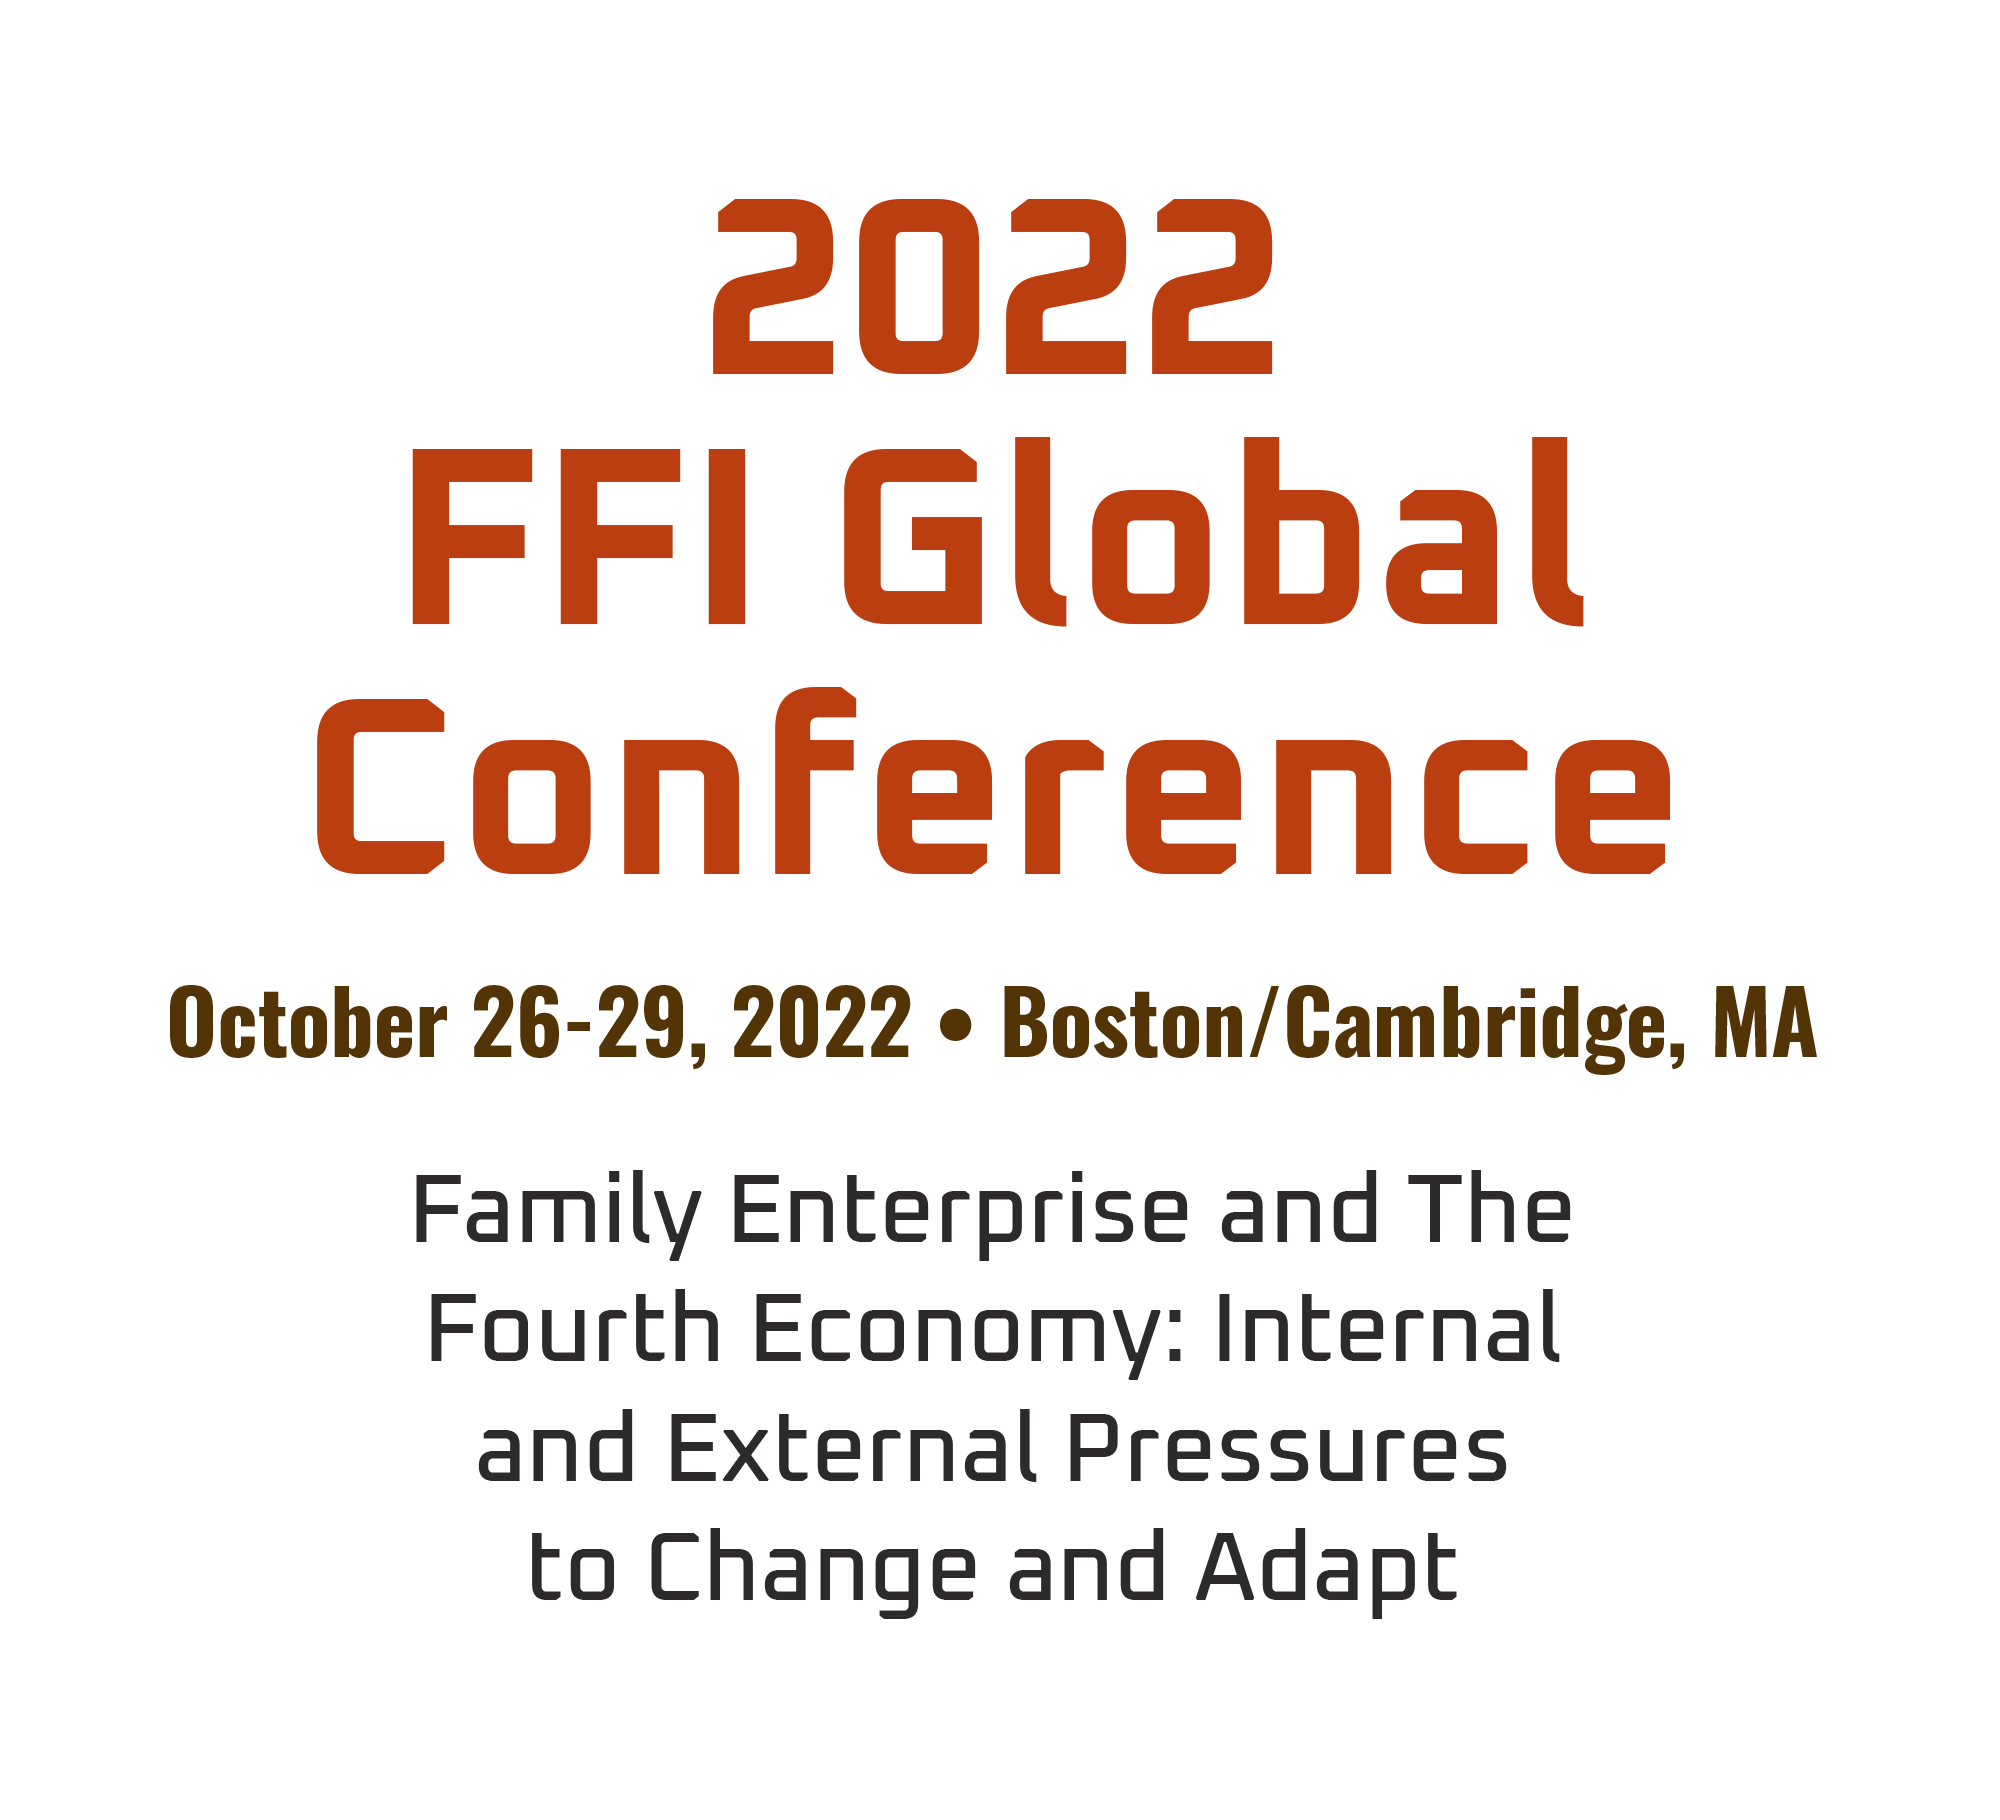 2022 FFI Global Conference logo